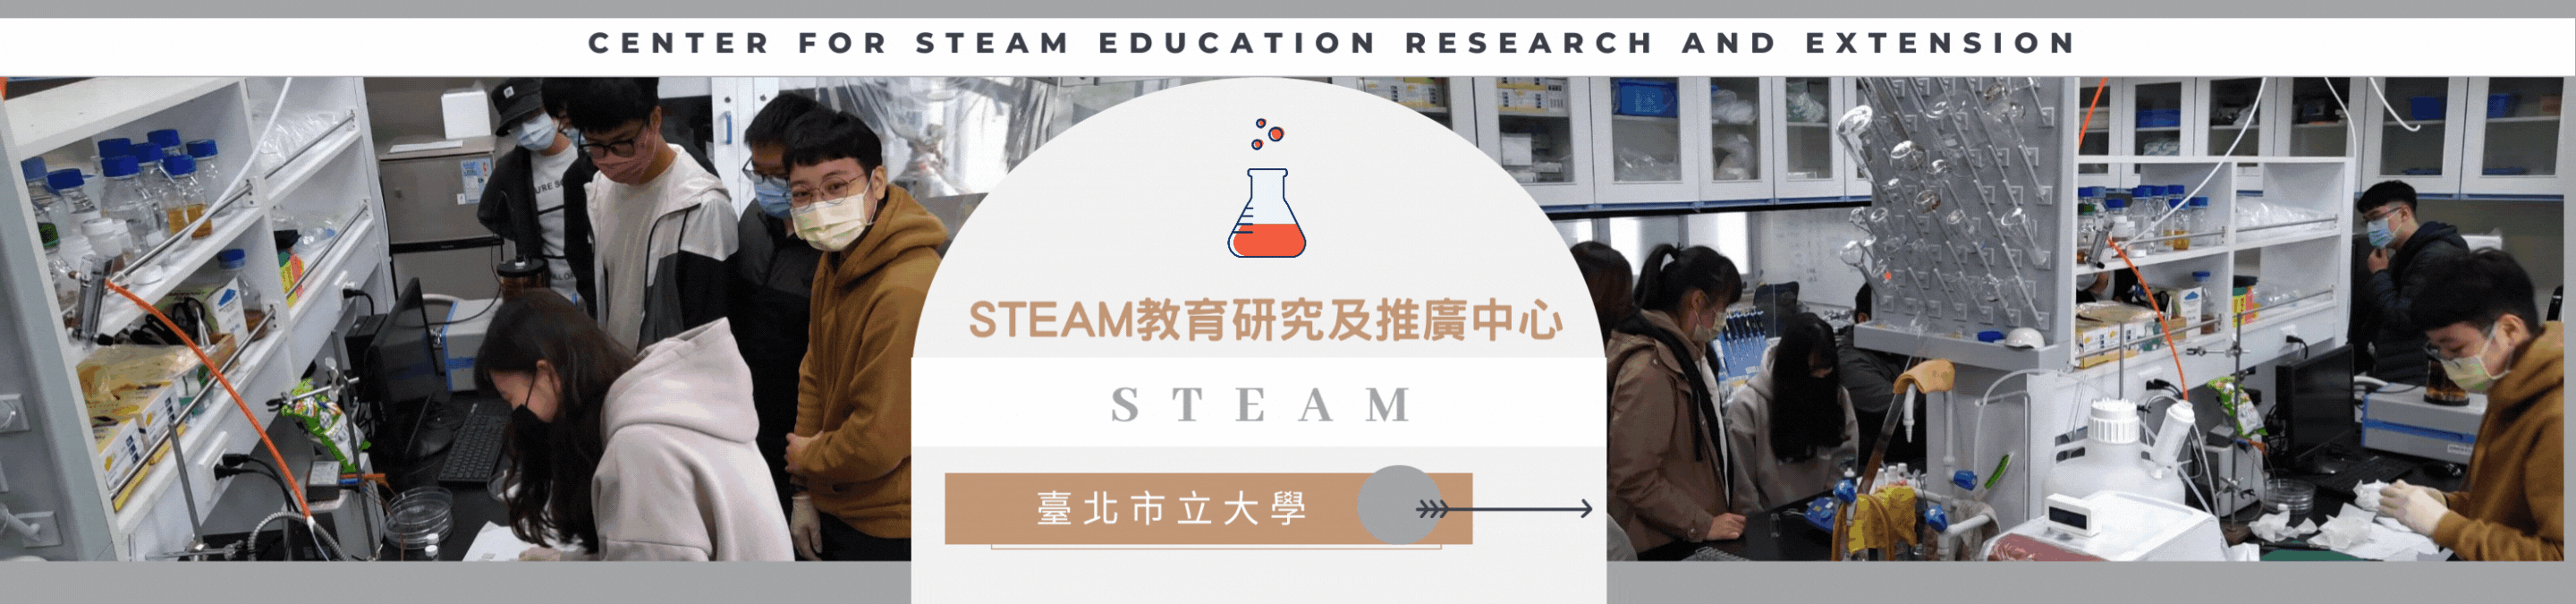 steam中心4